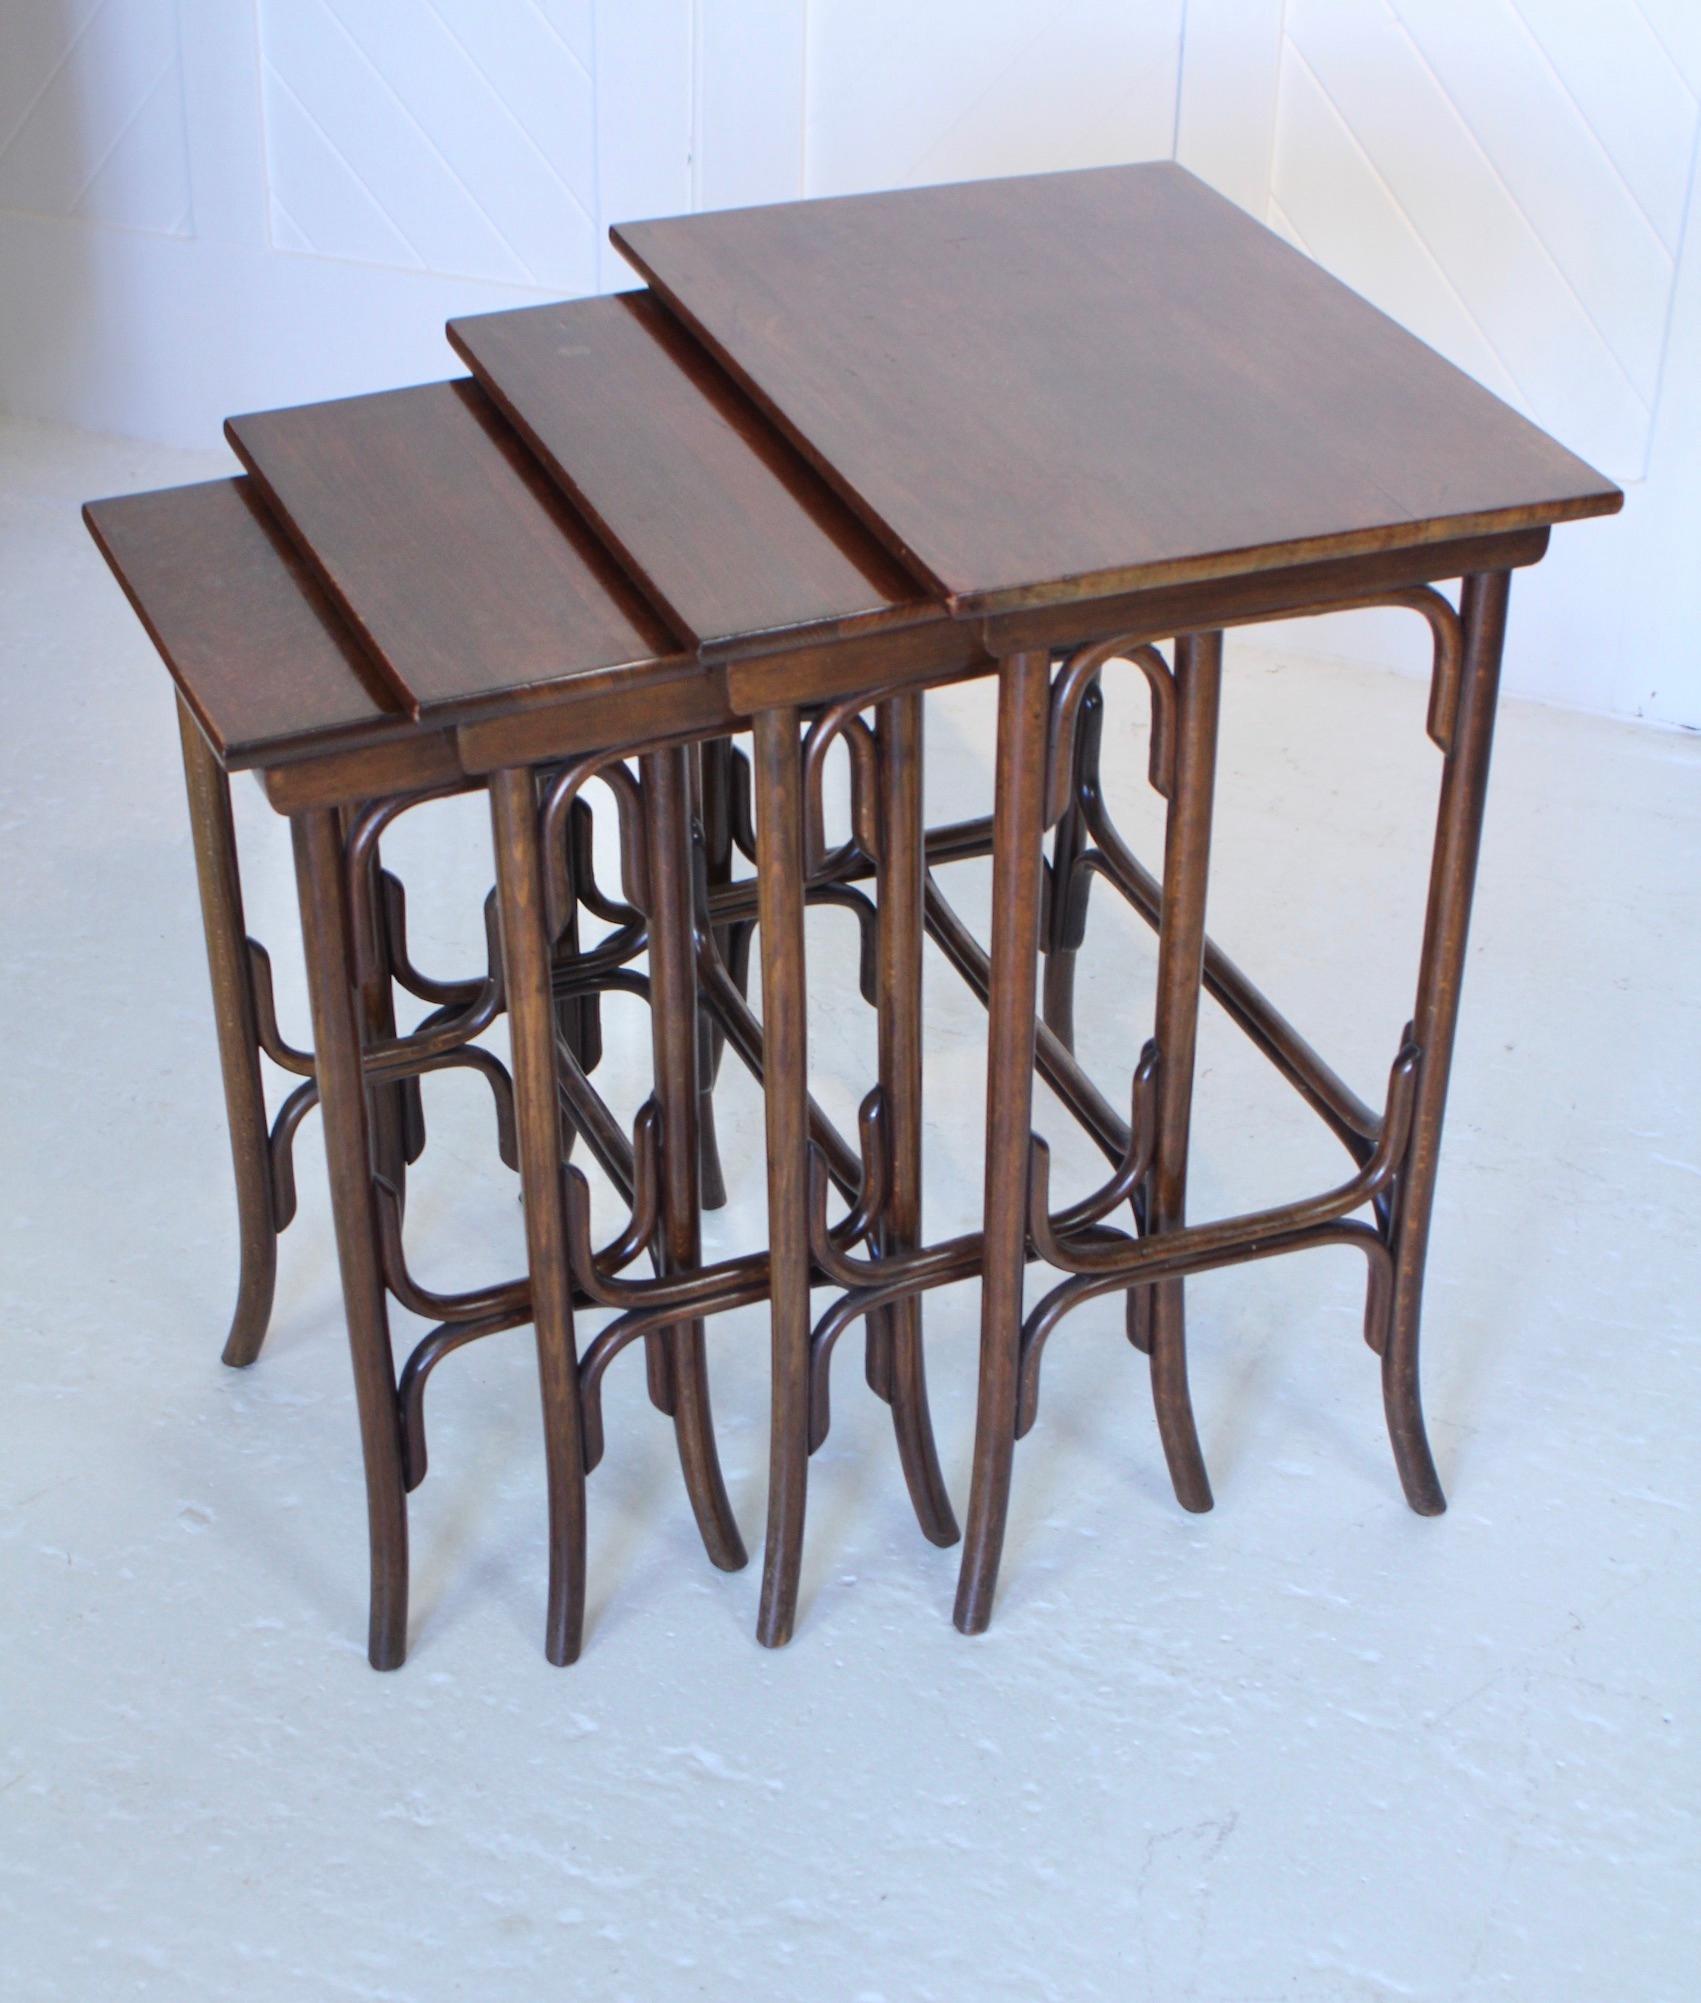 20th Century Art Nouveau Nest Of 4 Tables By Thonet For Sale